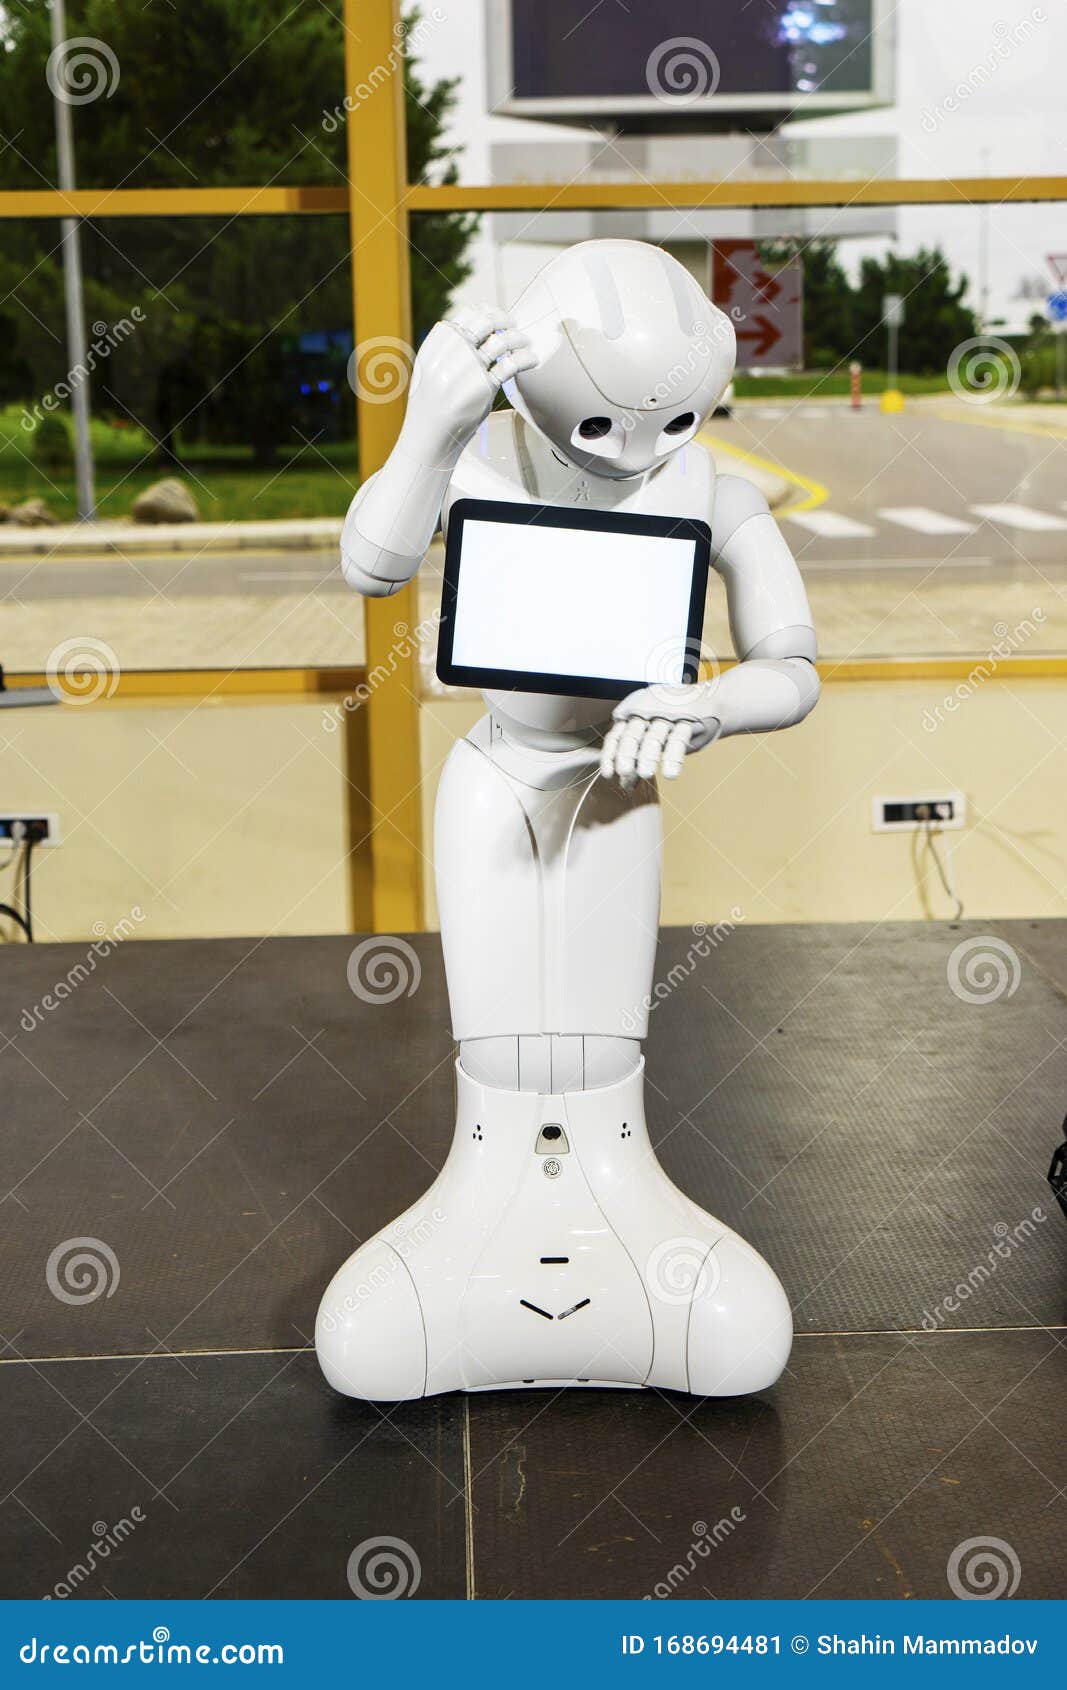 modern robotic technologies. electronics show-exhibition of consumer electronics. the robot shows emotion. raises hands upward,